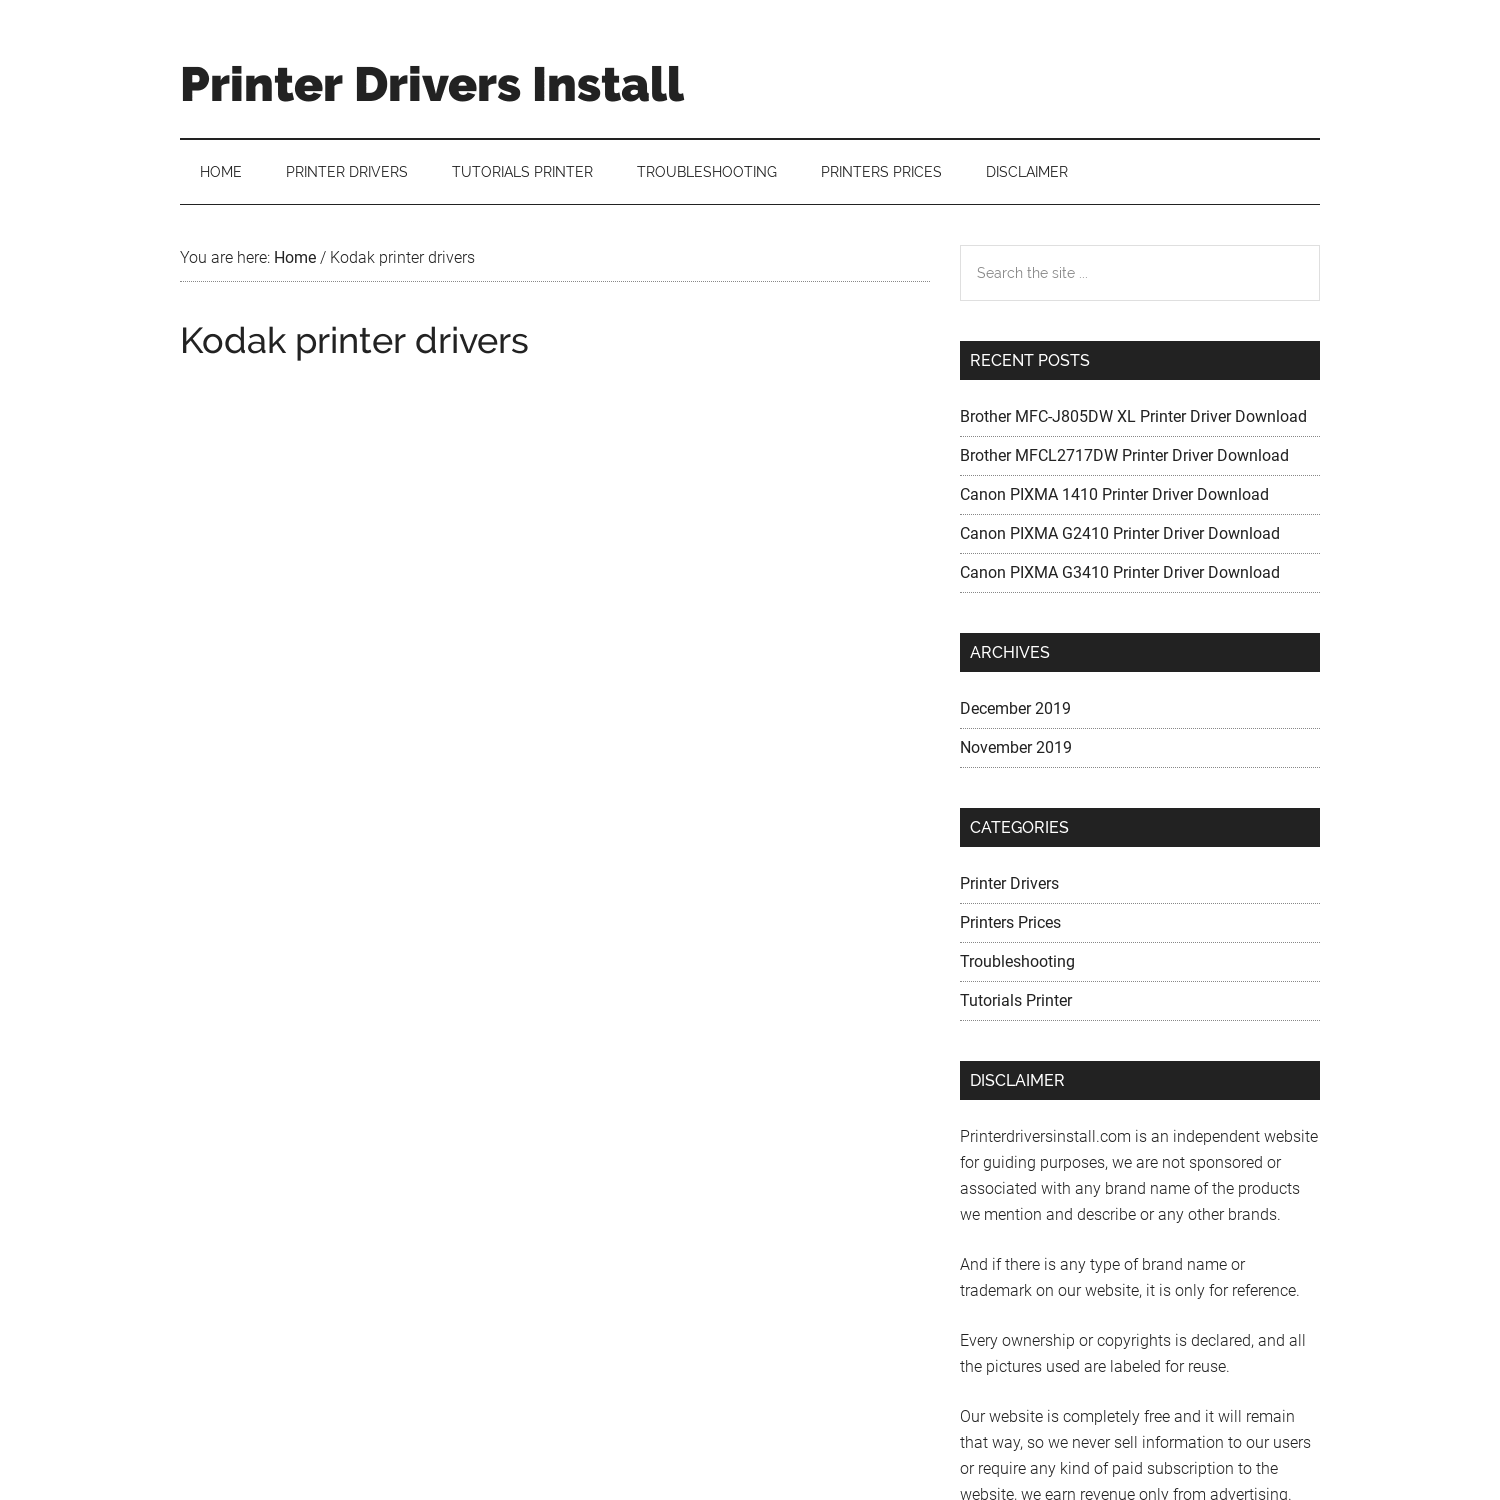 Kodak printer drivers - Printer Drivers Install